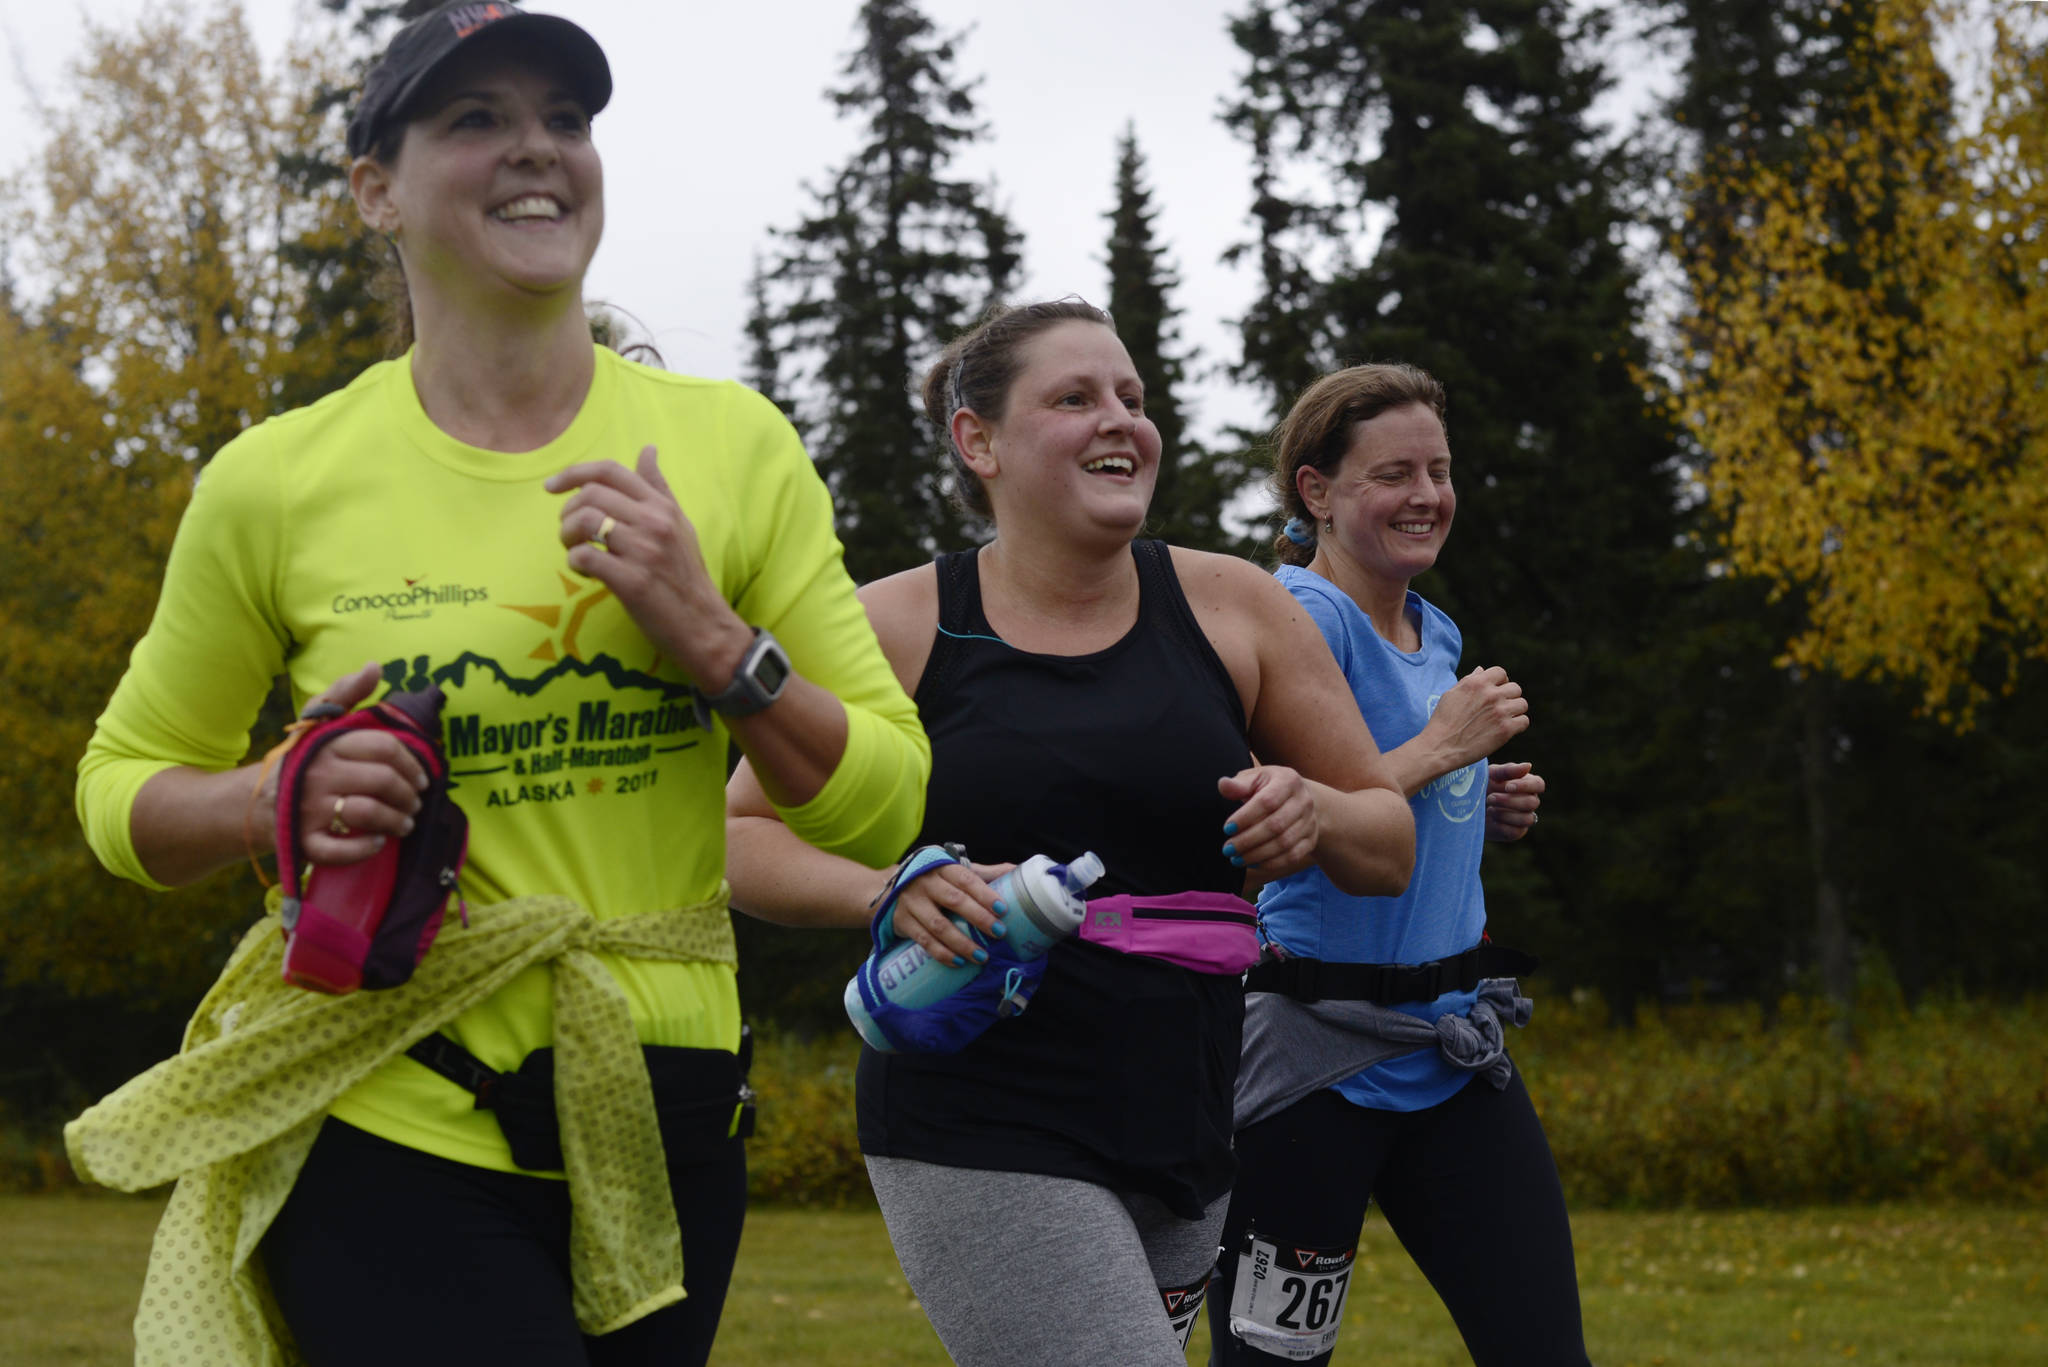 Runners Kimberly Buskirk (left), Kate Swaby, and Candace Cartwright run in the Kenai River half-marathon on Sunday, Sept. 24, 2017 in Kenai, Alaska. (Photo by Ben Boettger/Peninsula Clarion)